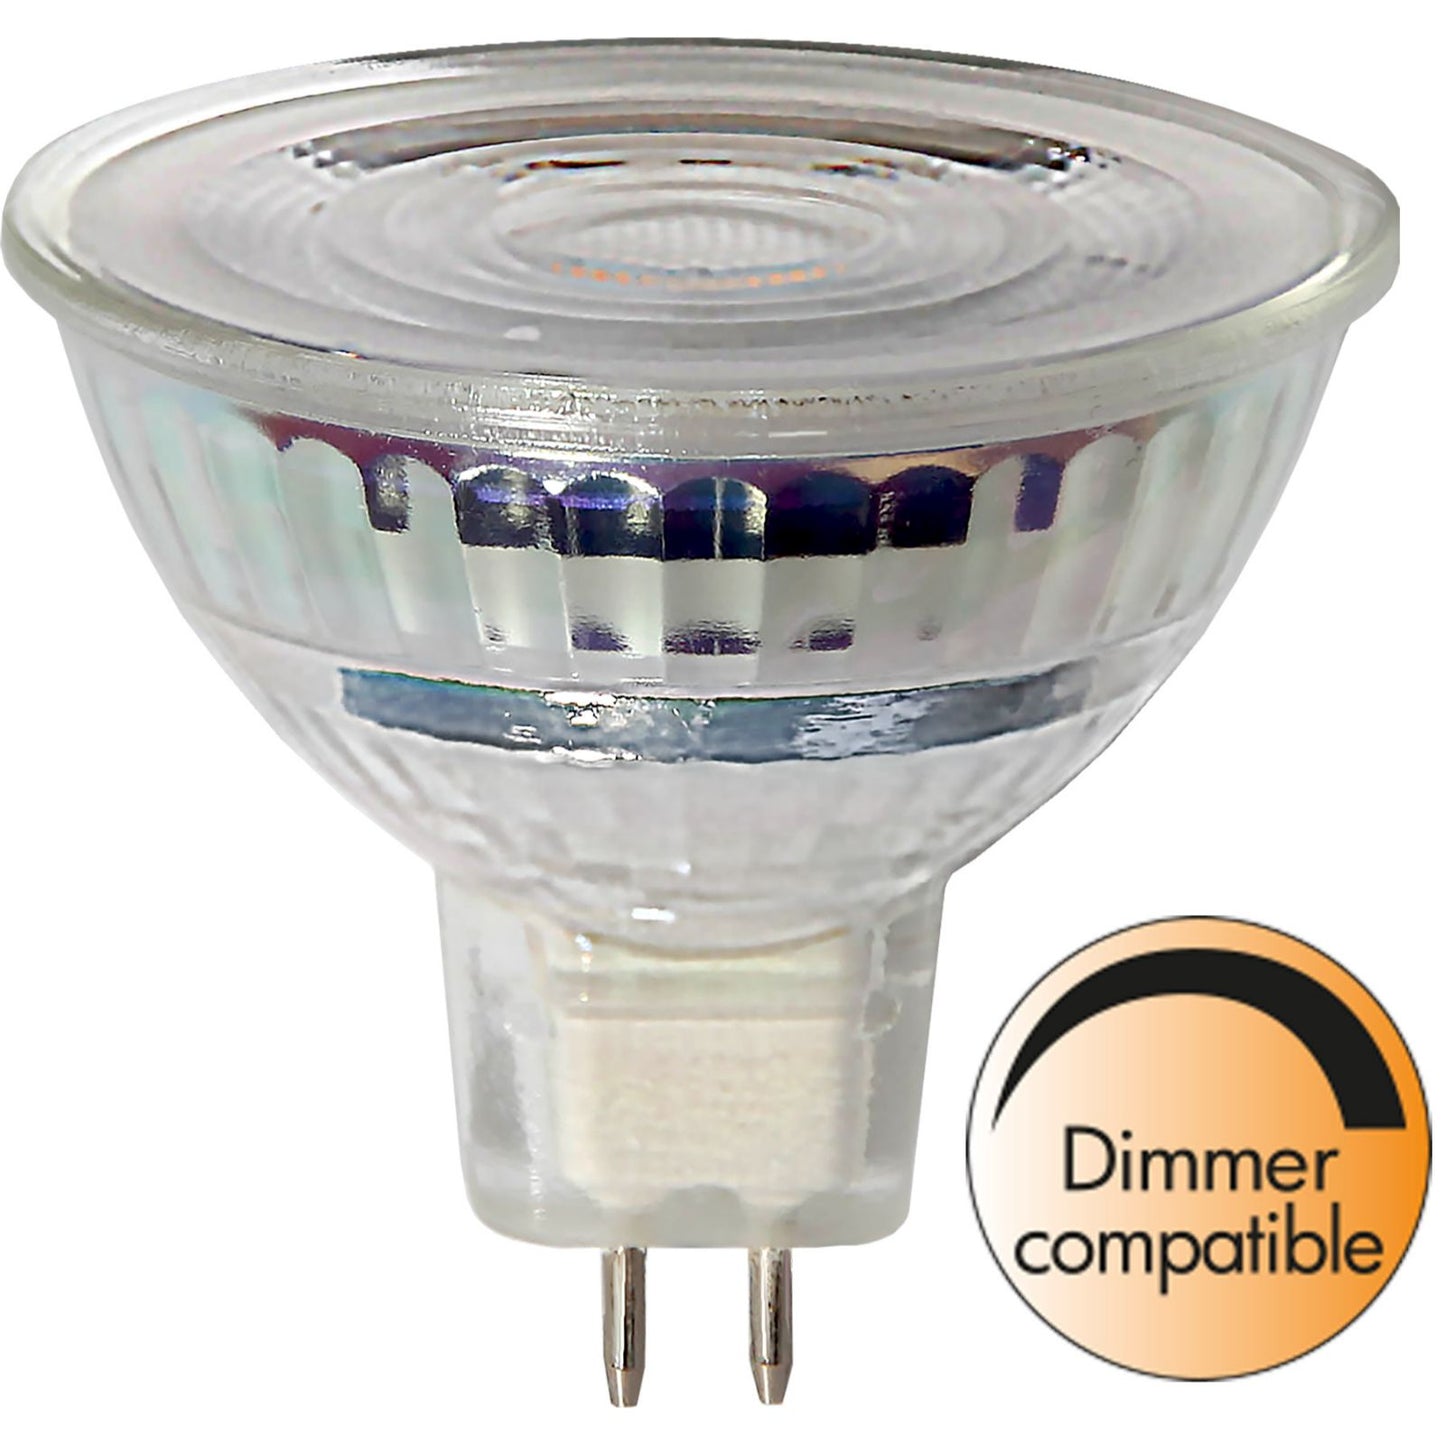 led-lampa-gu5,3-mr16-spotlight-glass-346-09-1